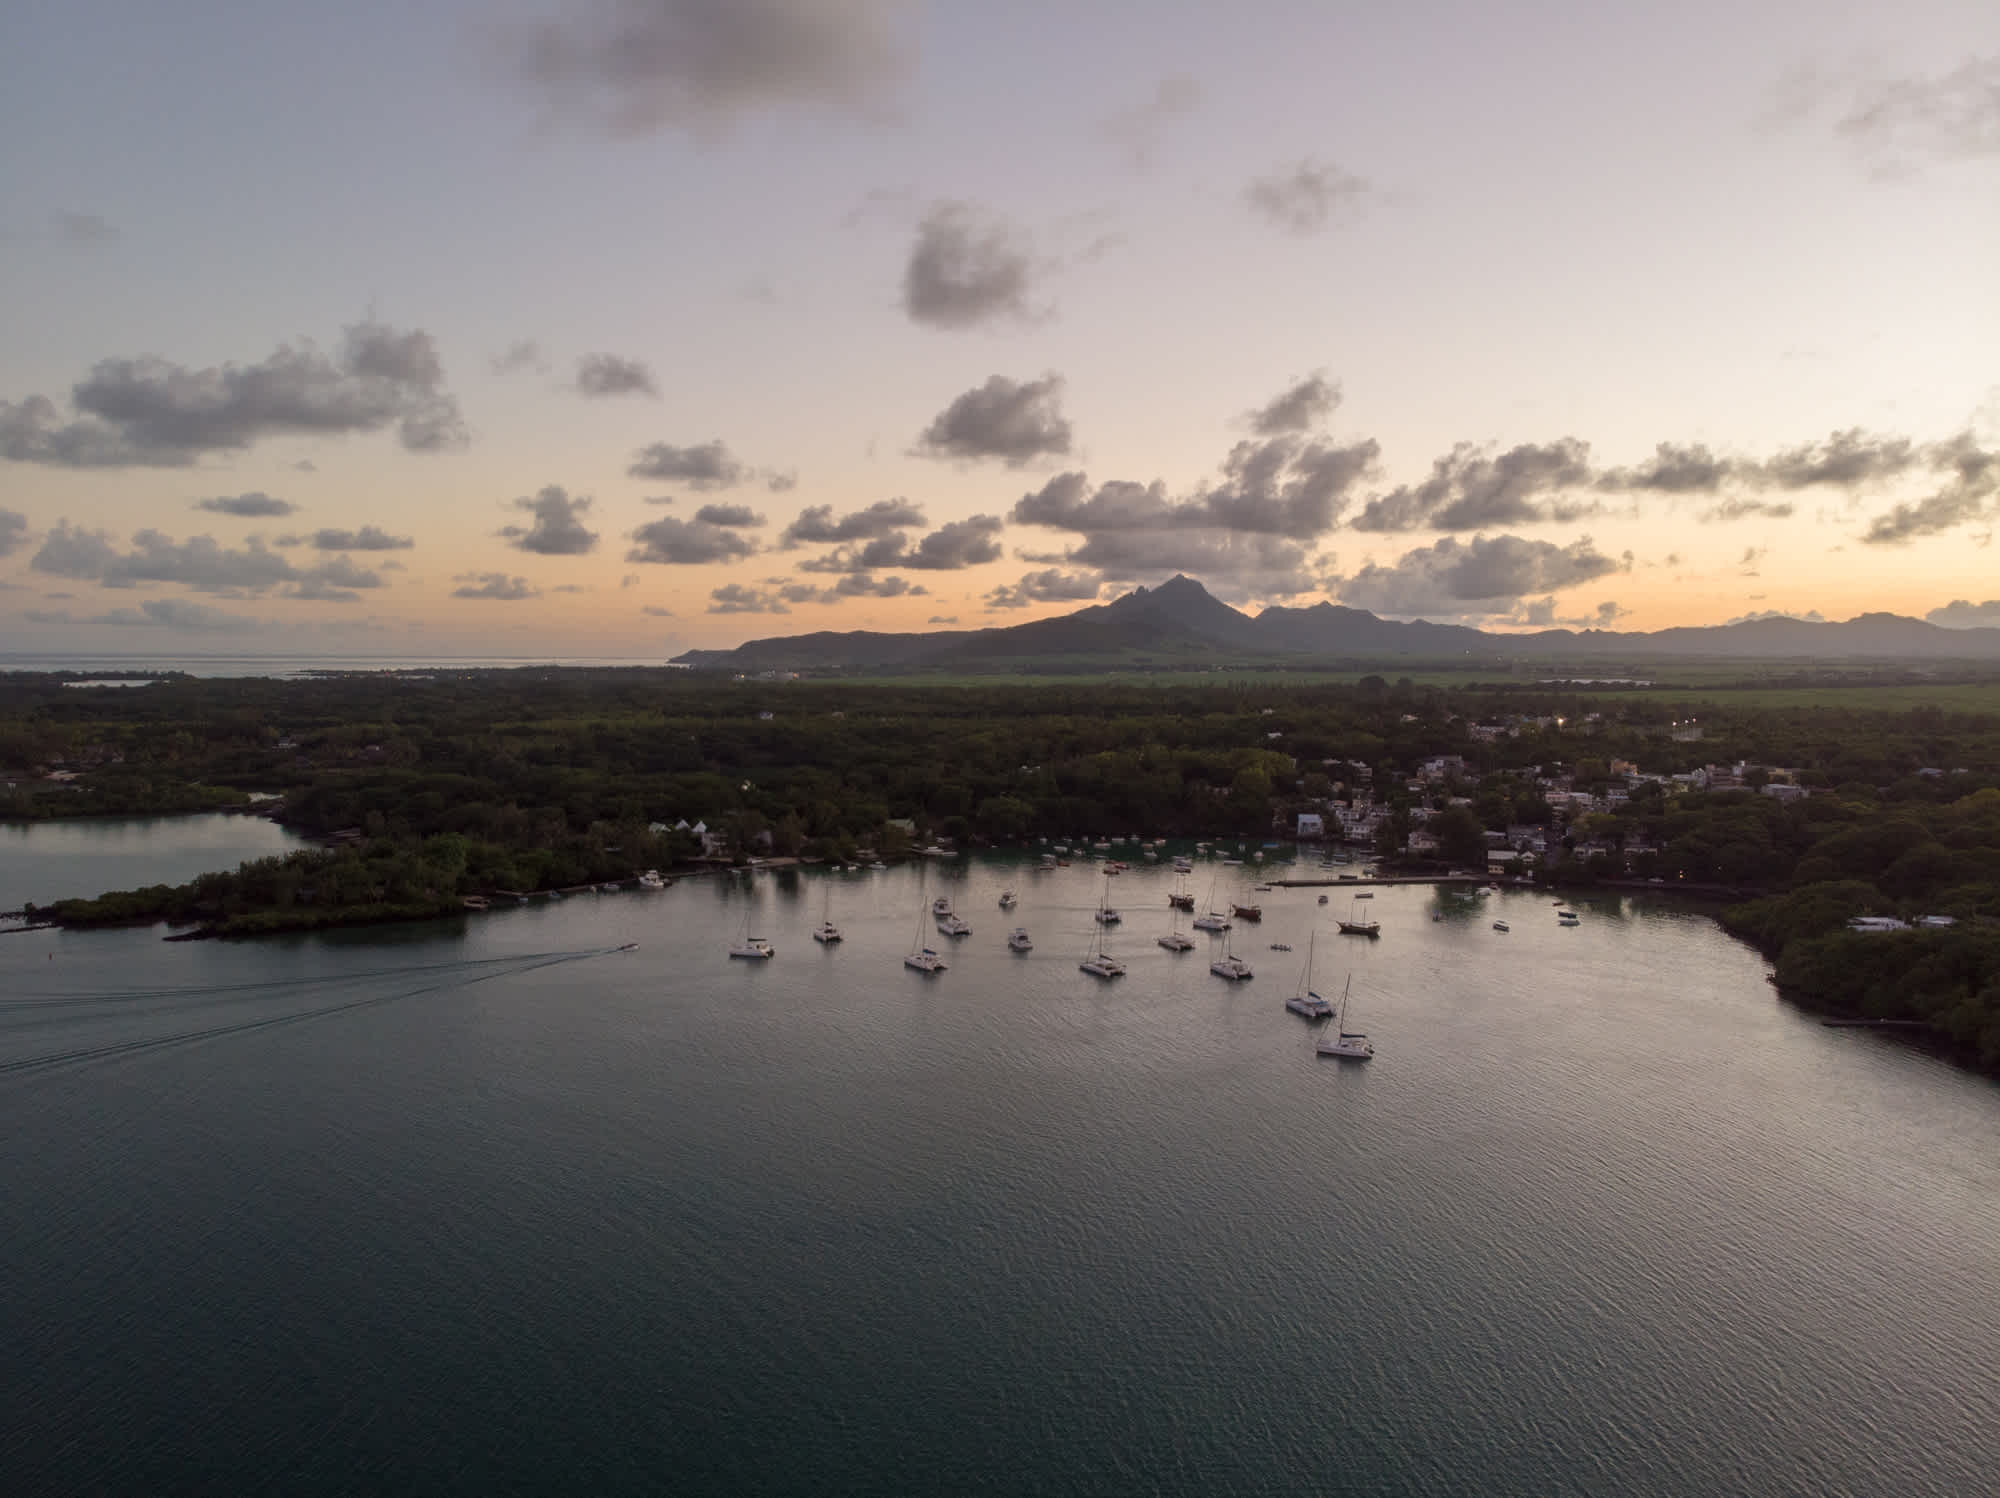 Luftdrohne Foto von Trou d'eau Douce in Mauritius beim Sonnenuntergang.